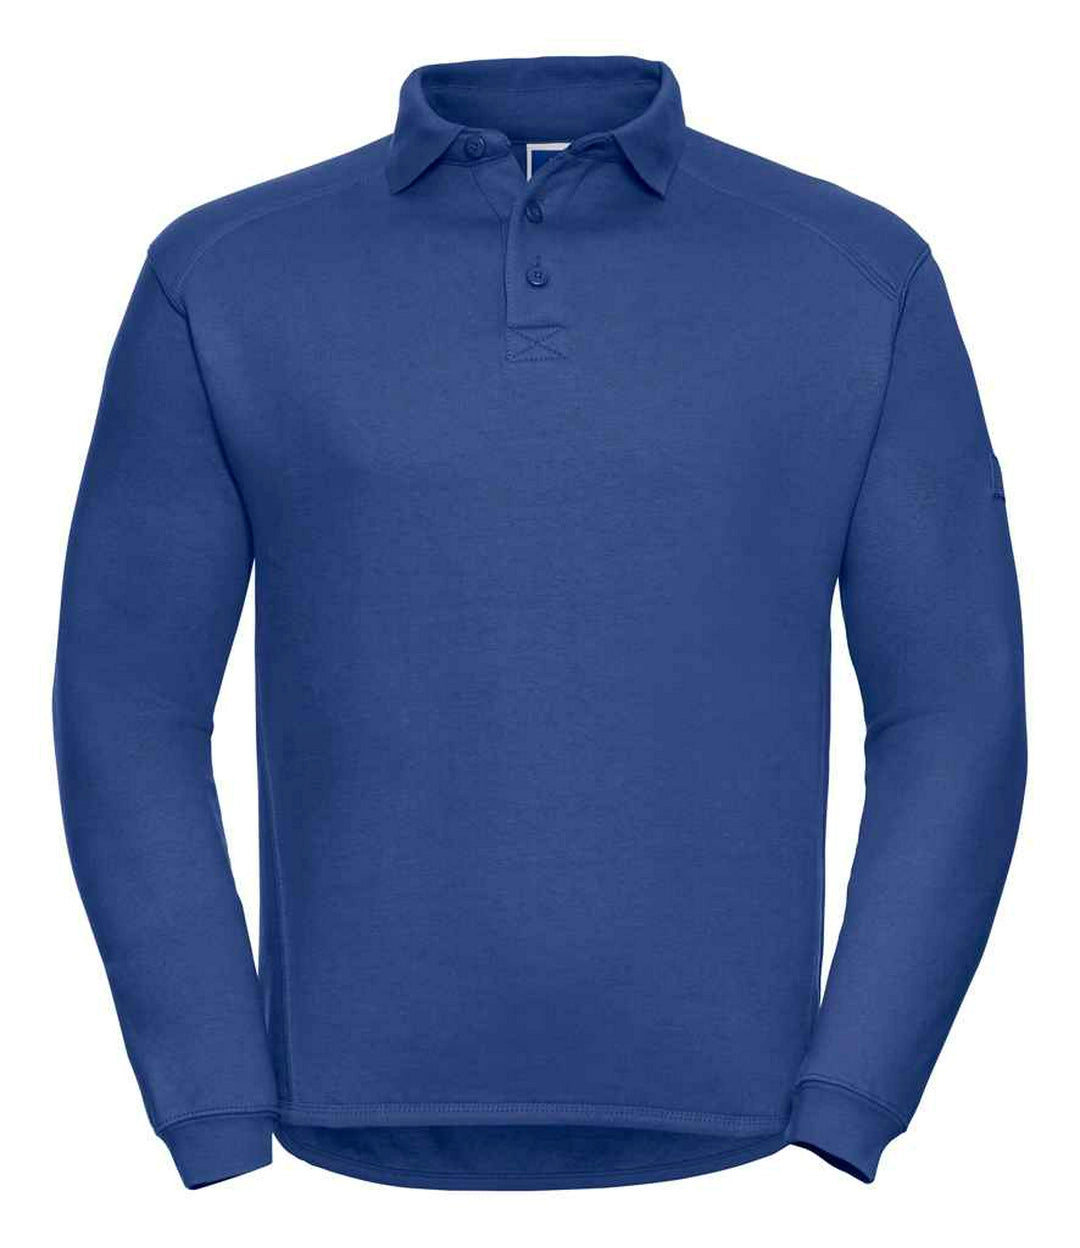 Russell 012M Heavy Duty Collar Sweatshirt - COOZO